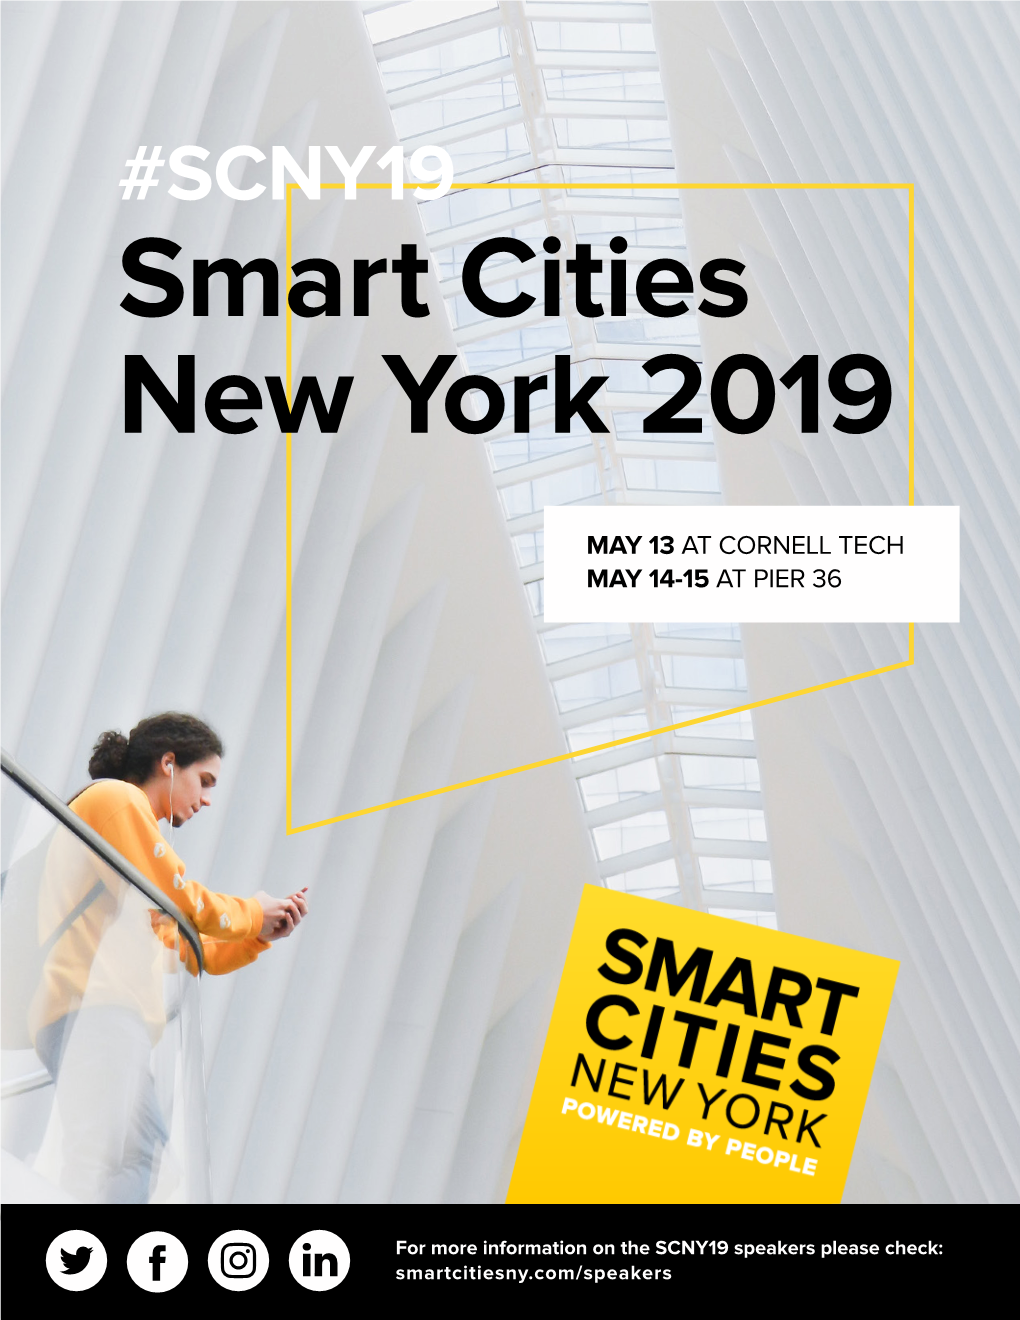 SCNY19 Smart Cities New York 2019